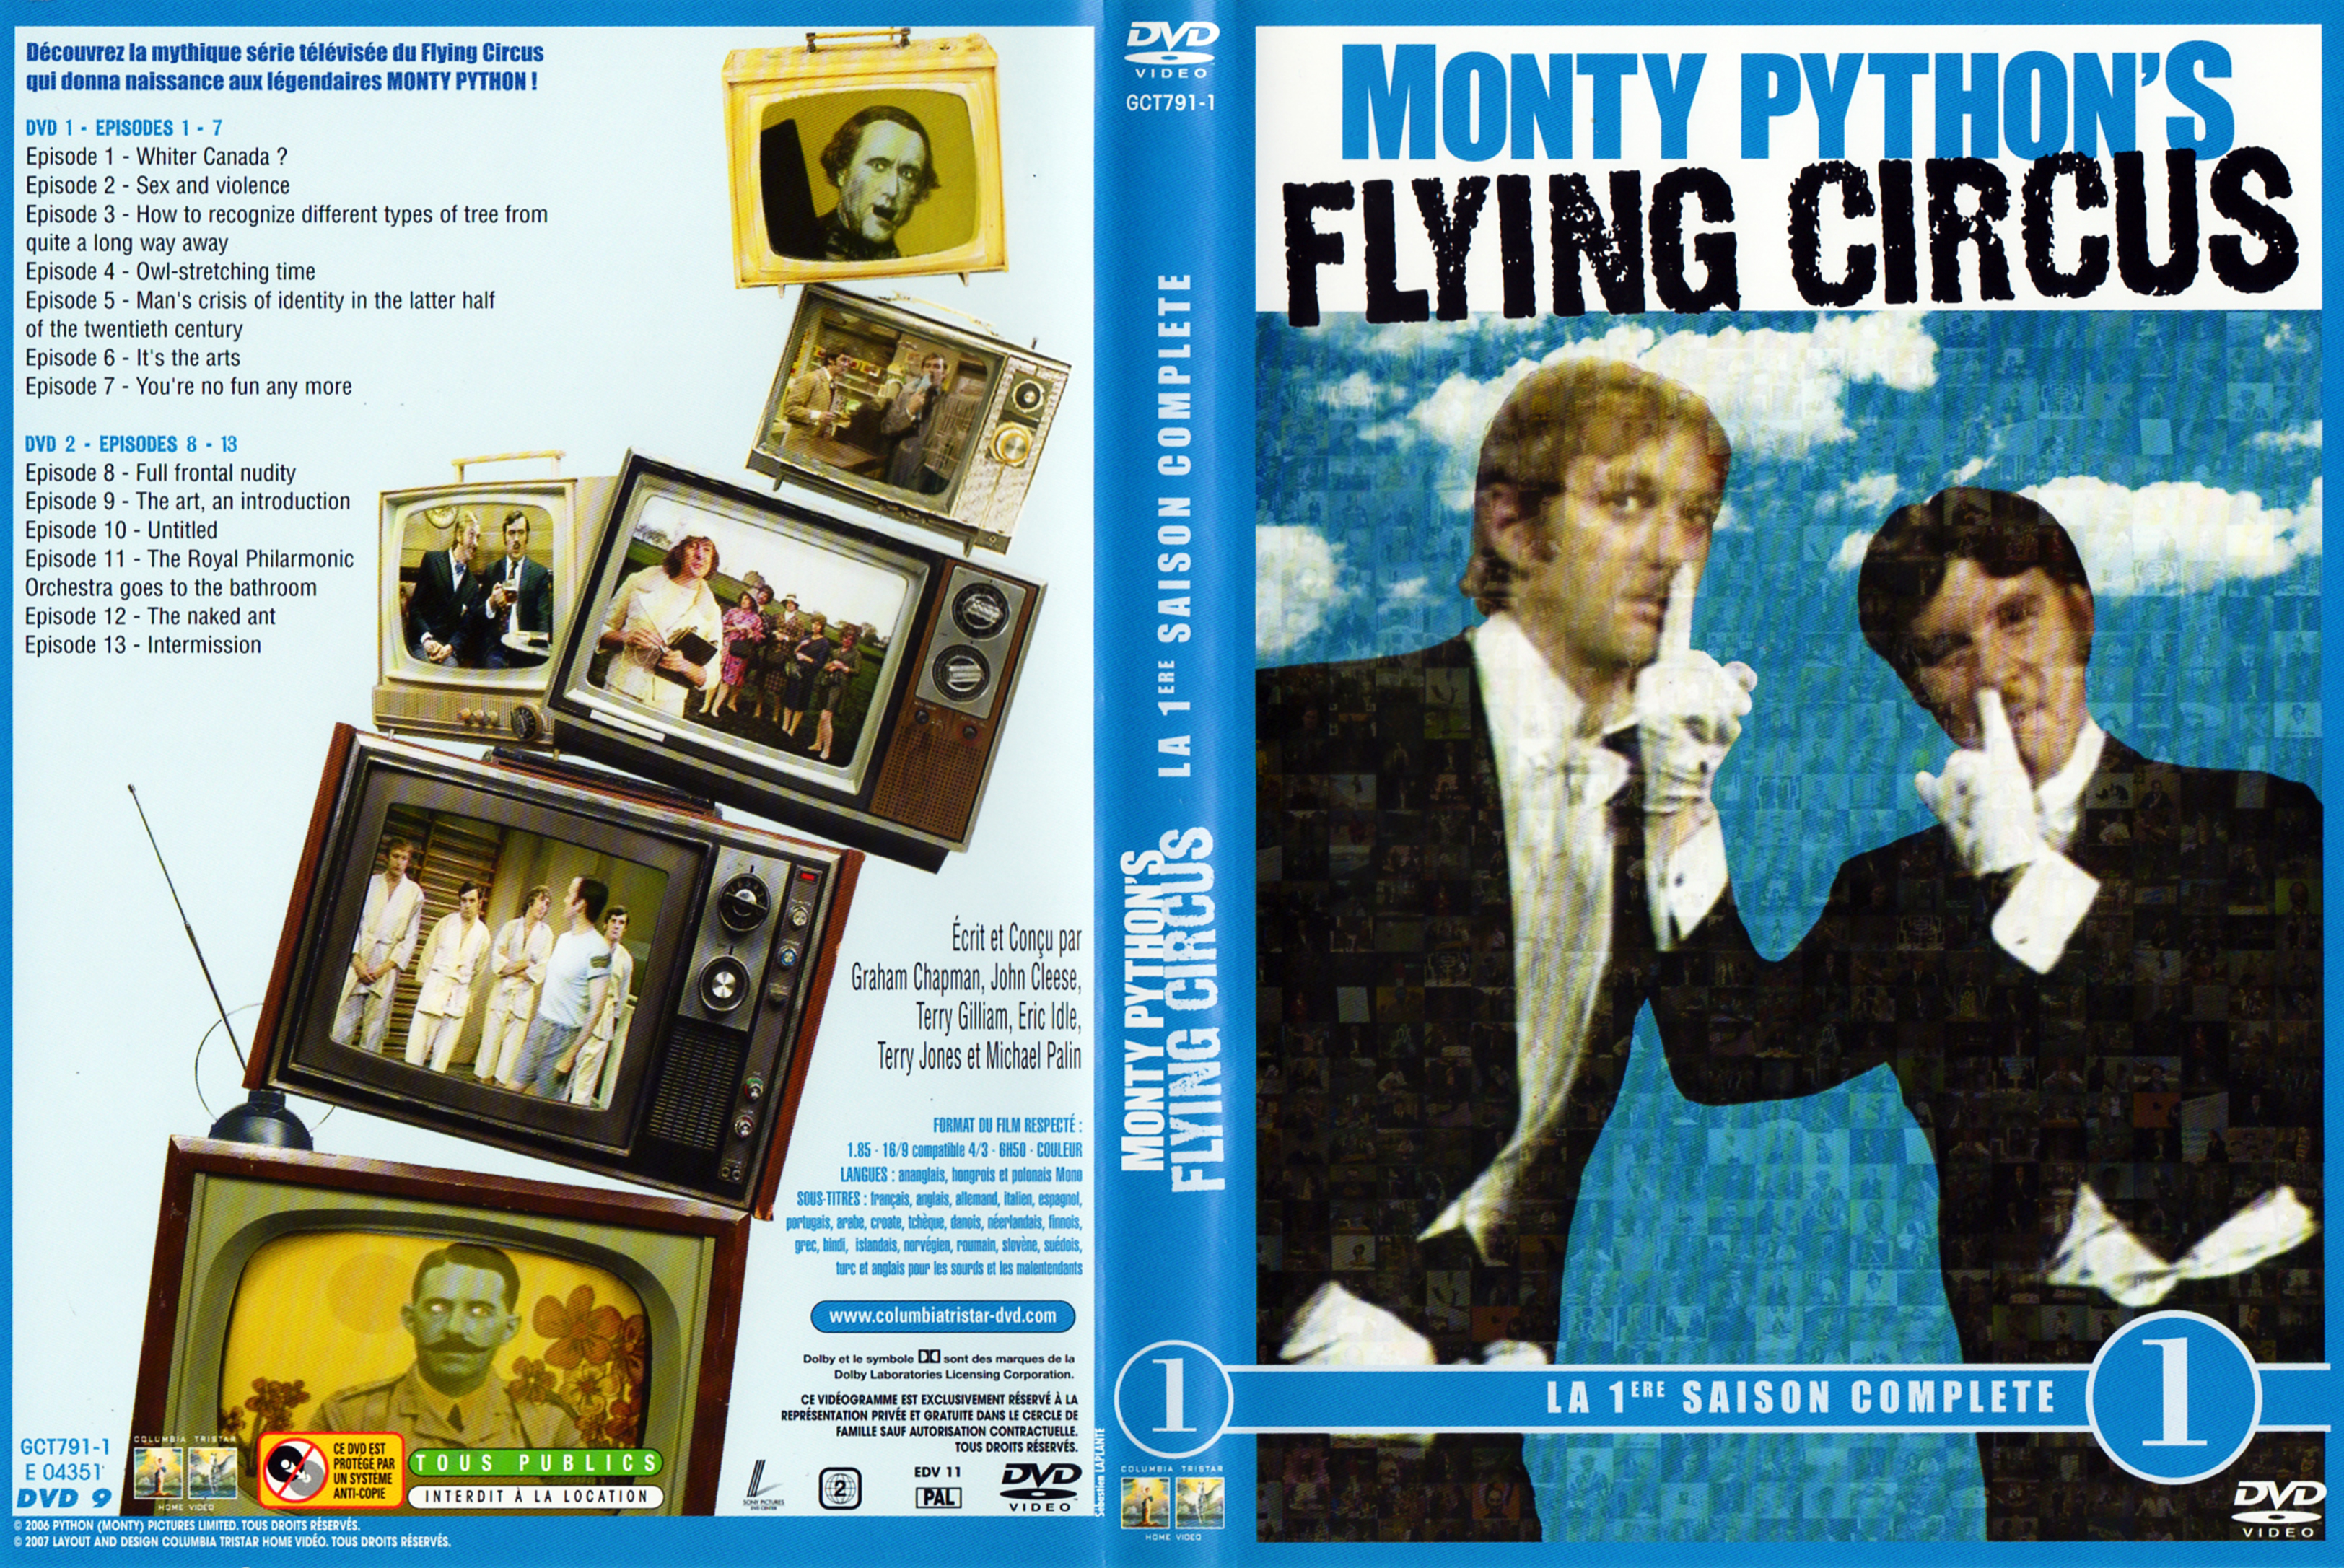 Jaquette DVD Monty Python - flying circus Saison 1